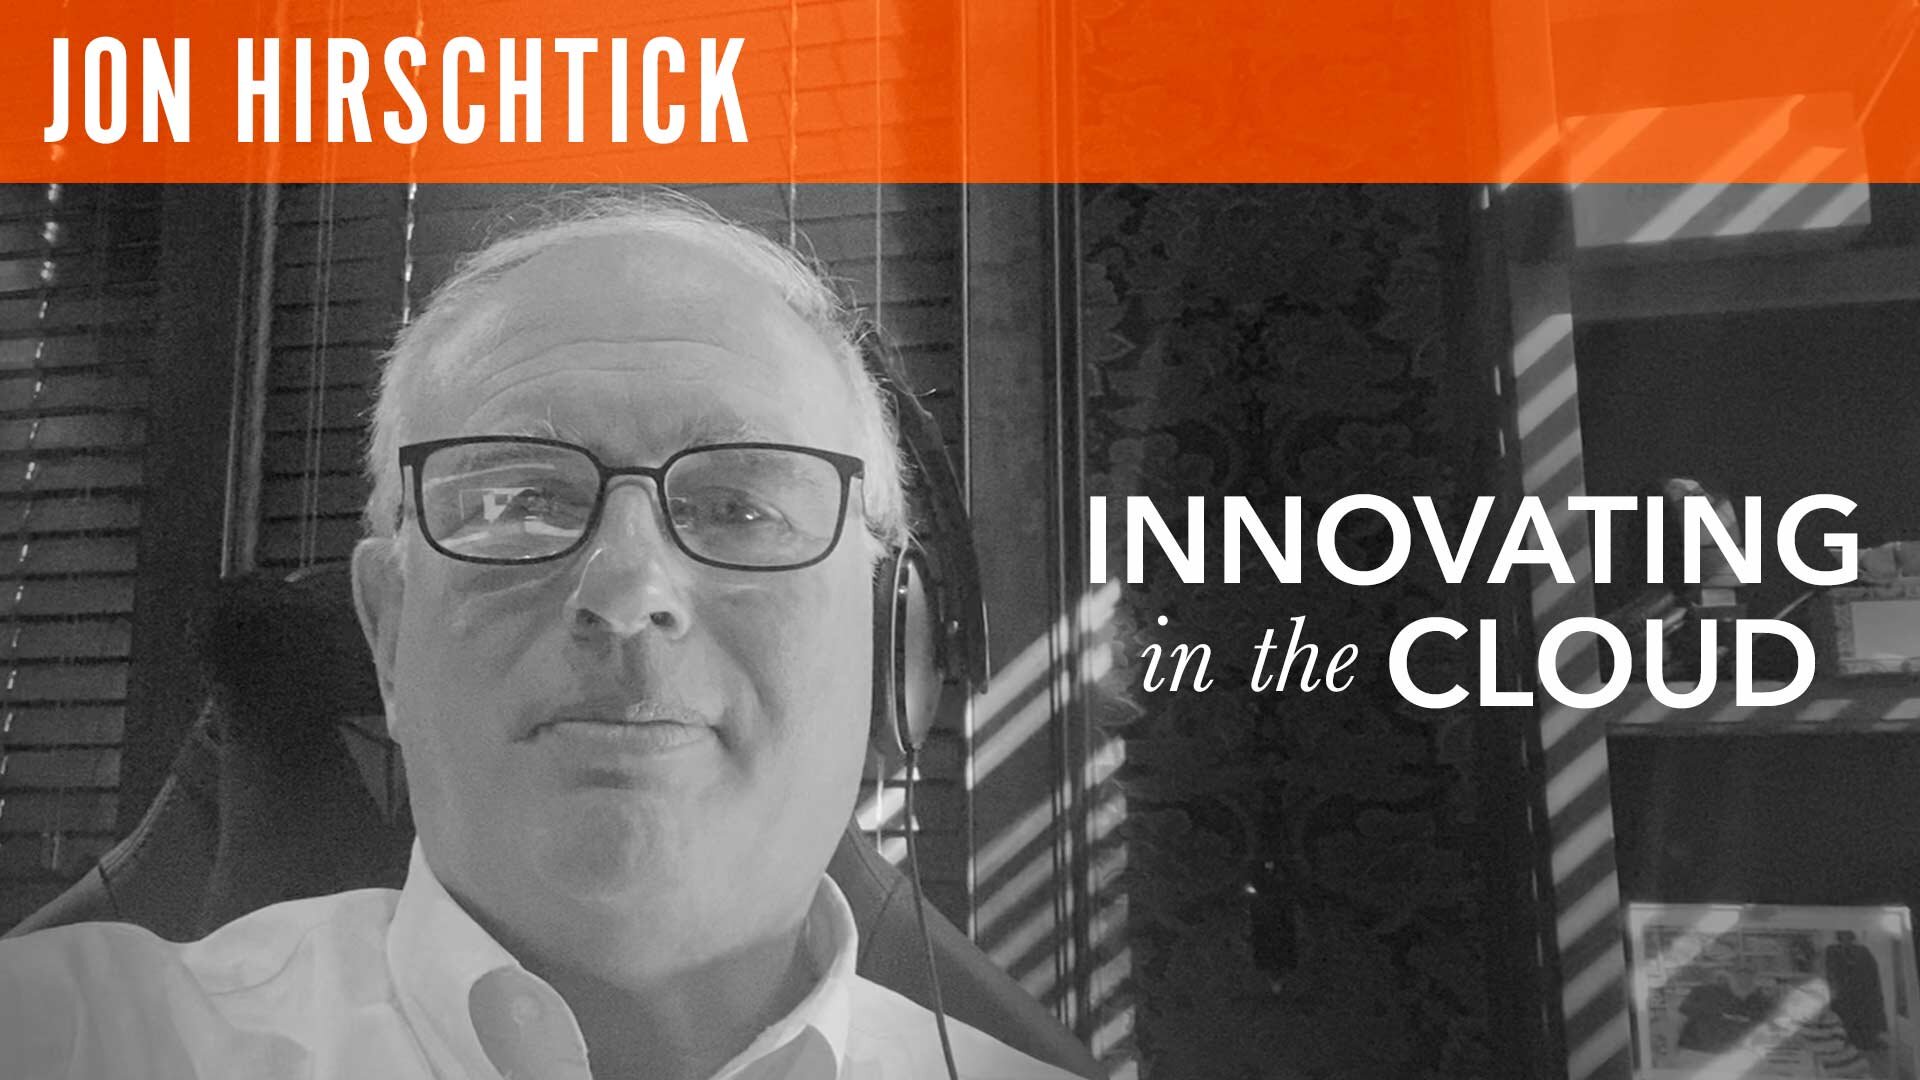 Jon Hirschtick, "Innovating in the Cloud"